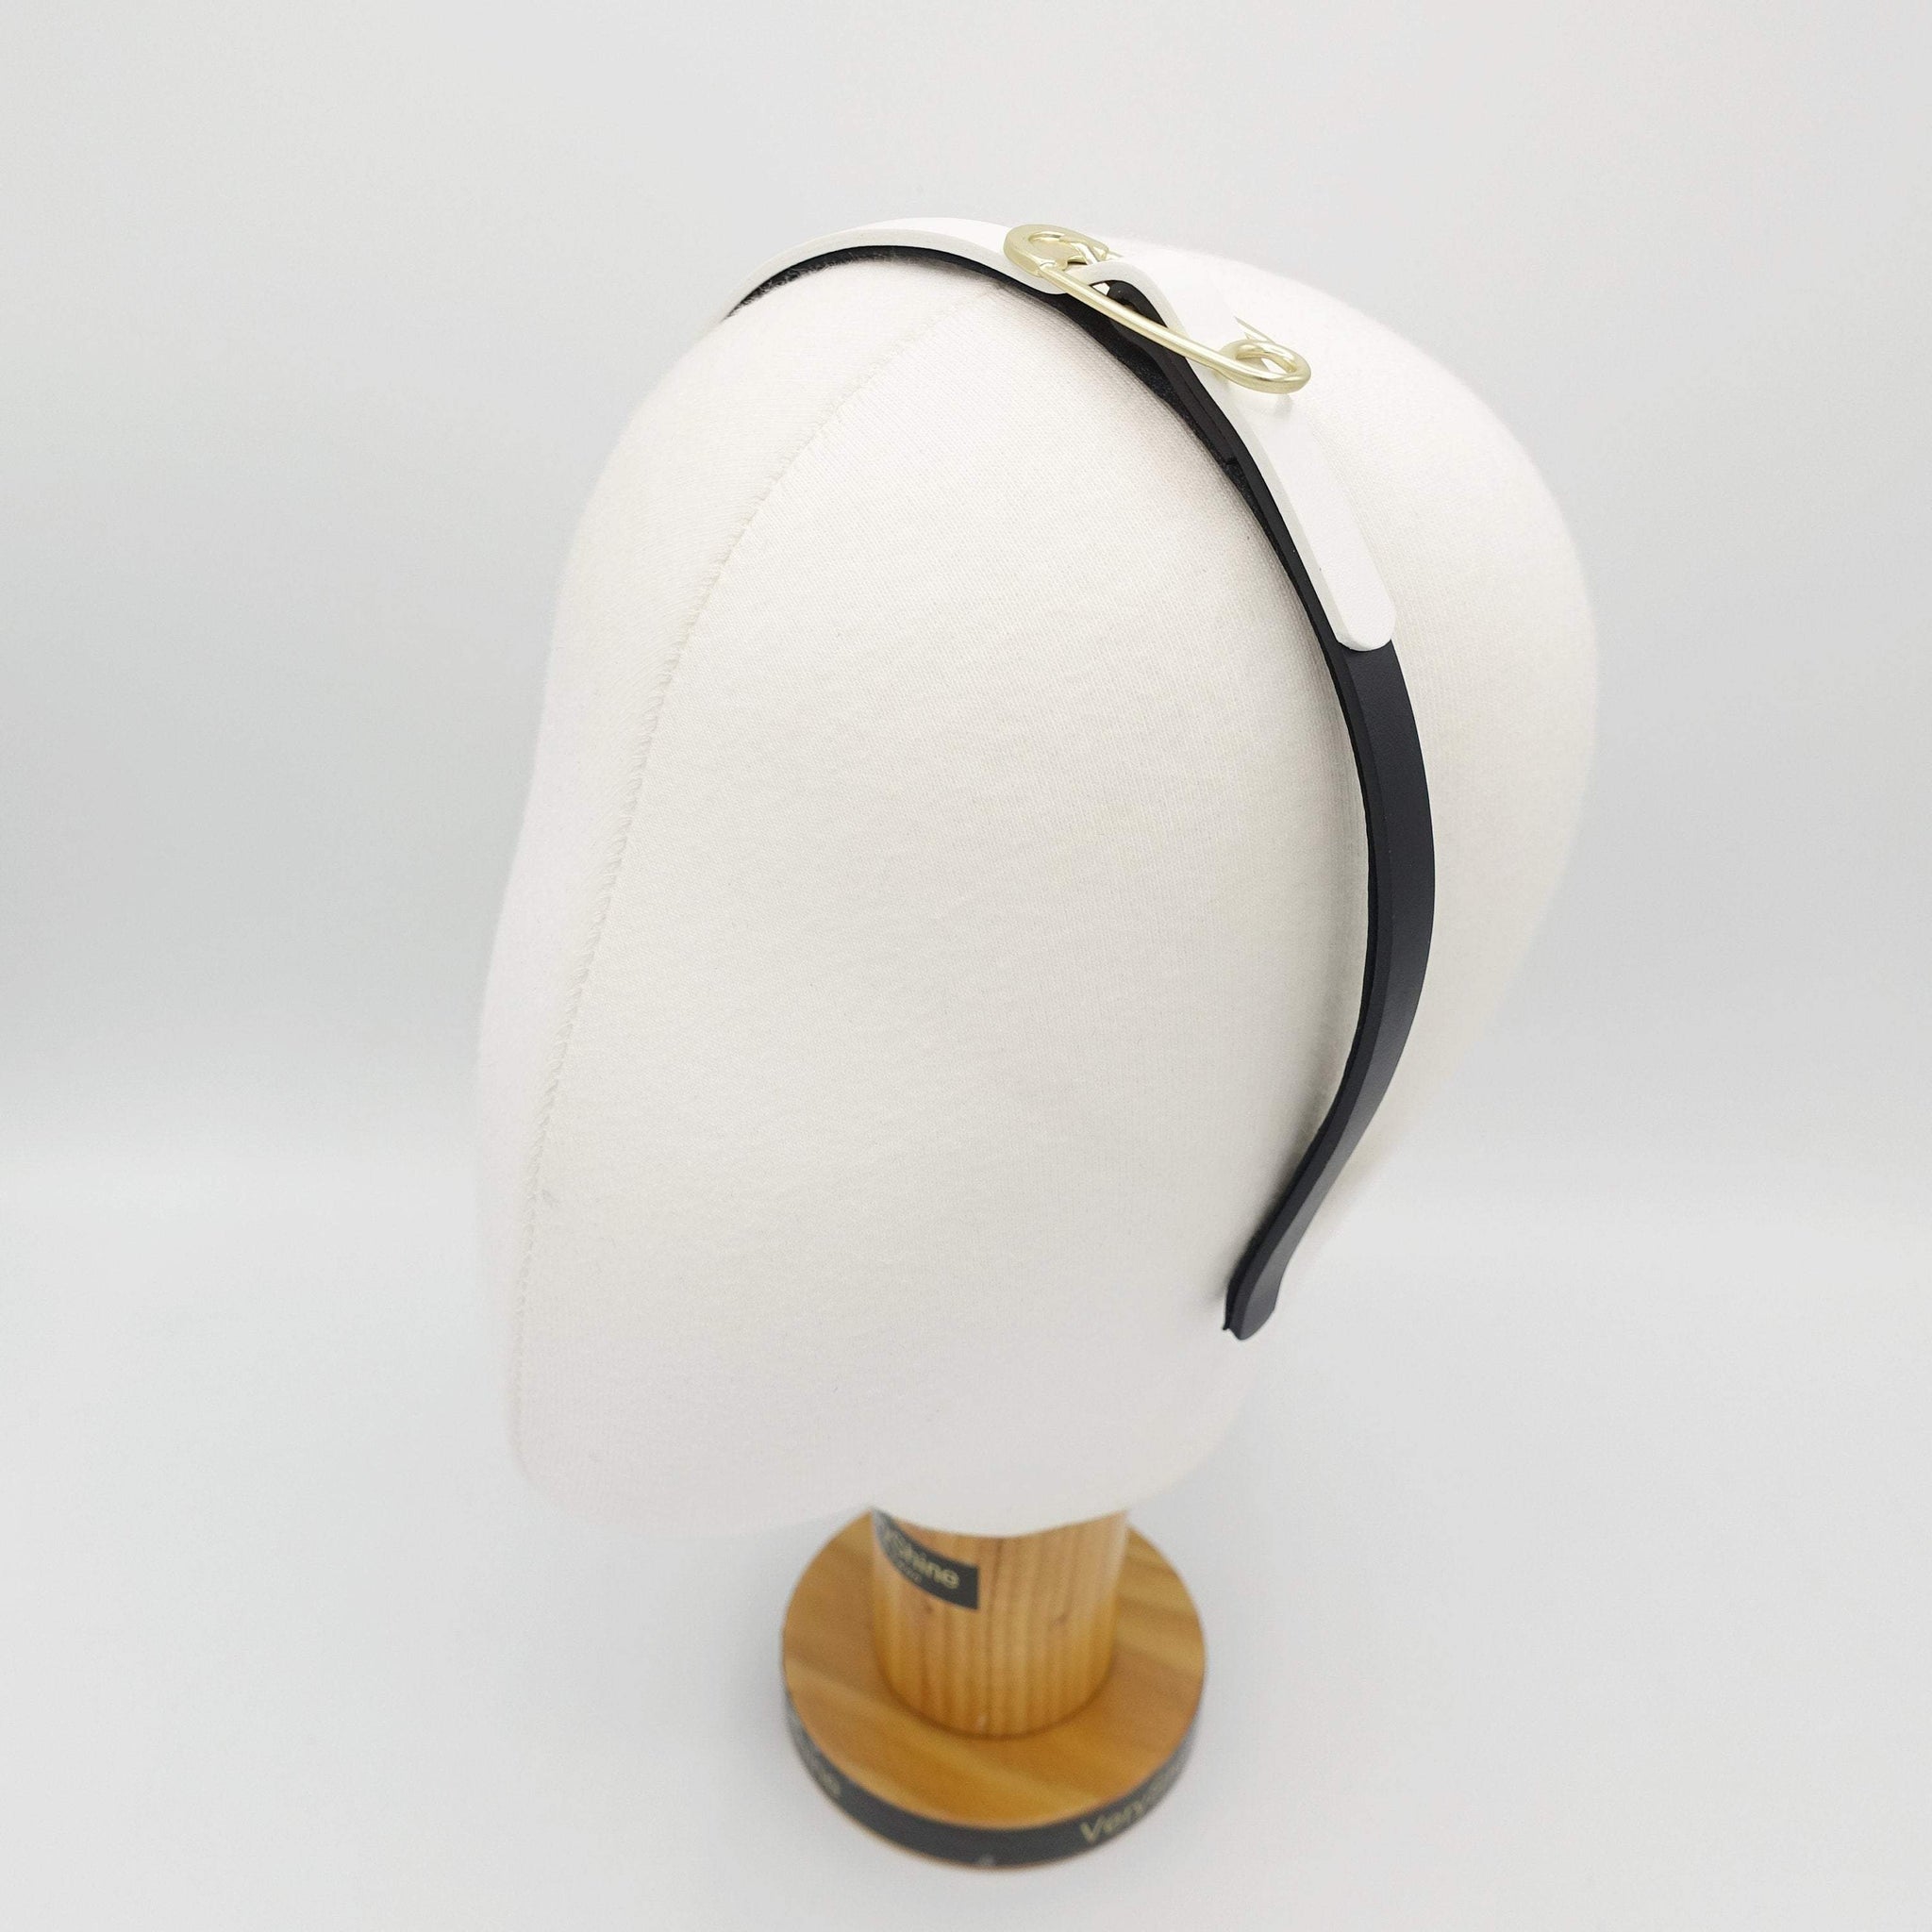 VeryShine Headband safety pin buckled leather headband thin hairband for women